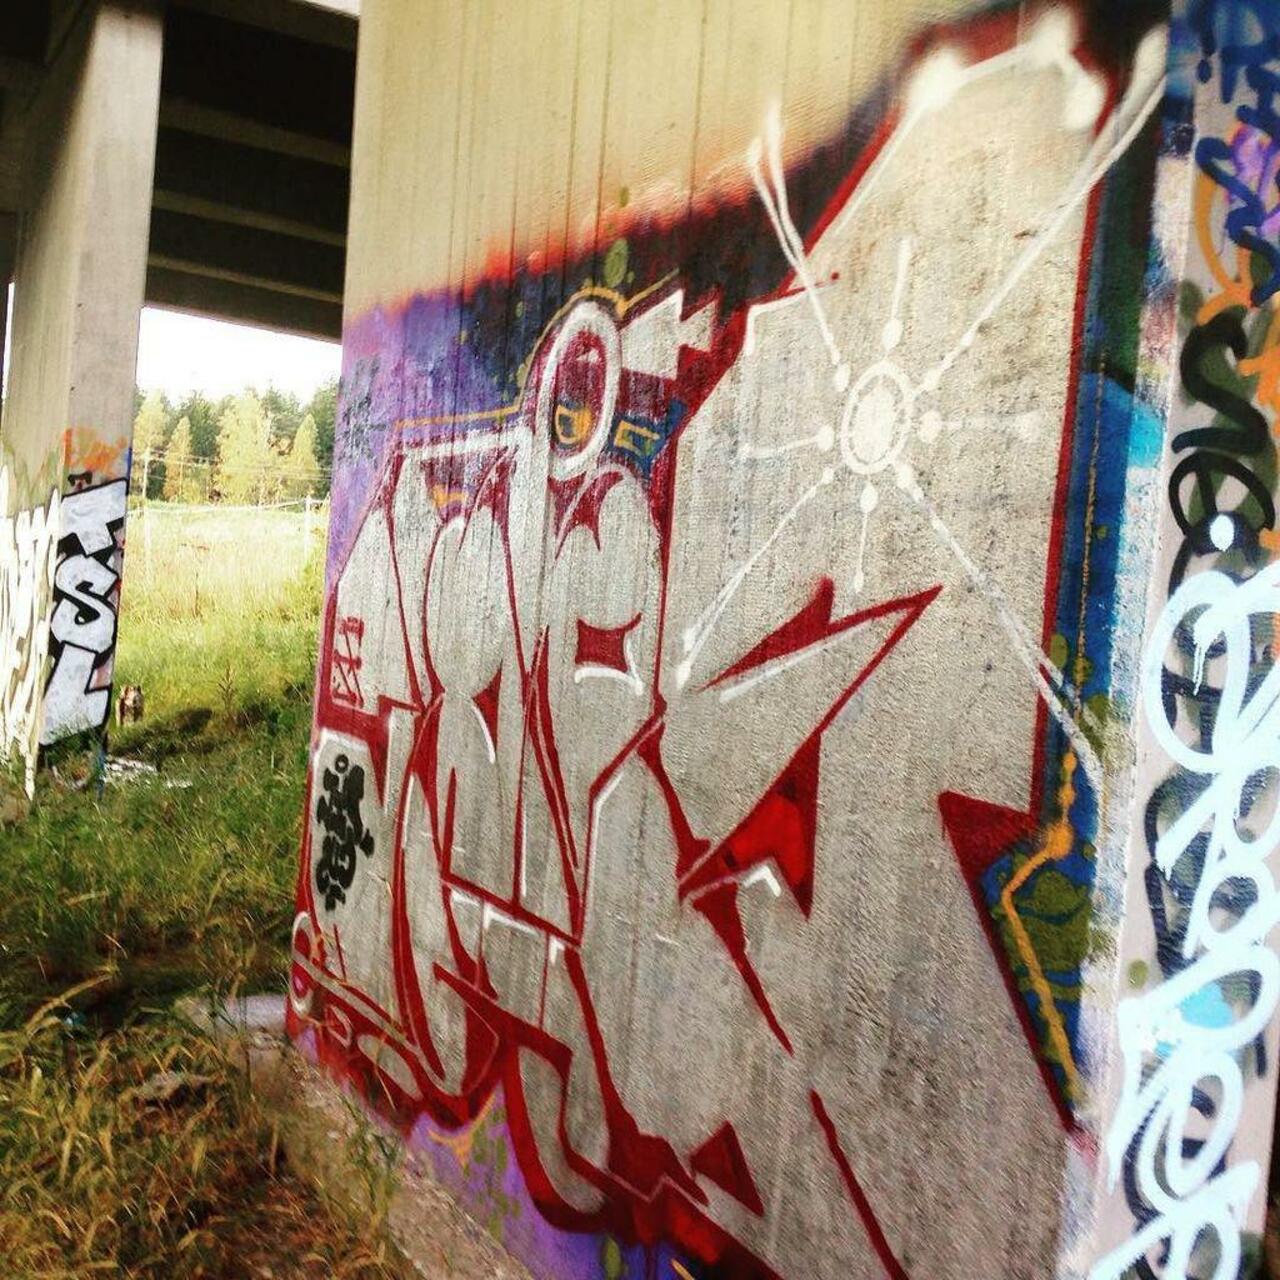 RT @artpushr: via #graffdays "http://ift.tt/1LeZNn7" #graffiti #streetart http://t.co/iRyRijiavi